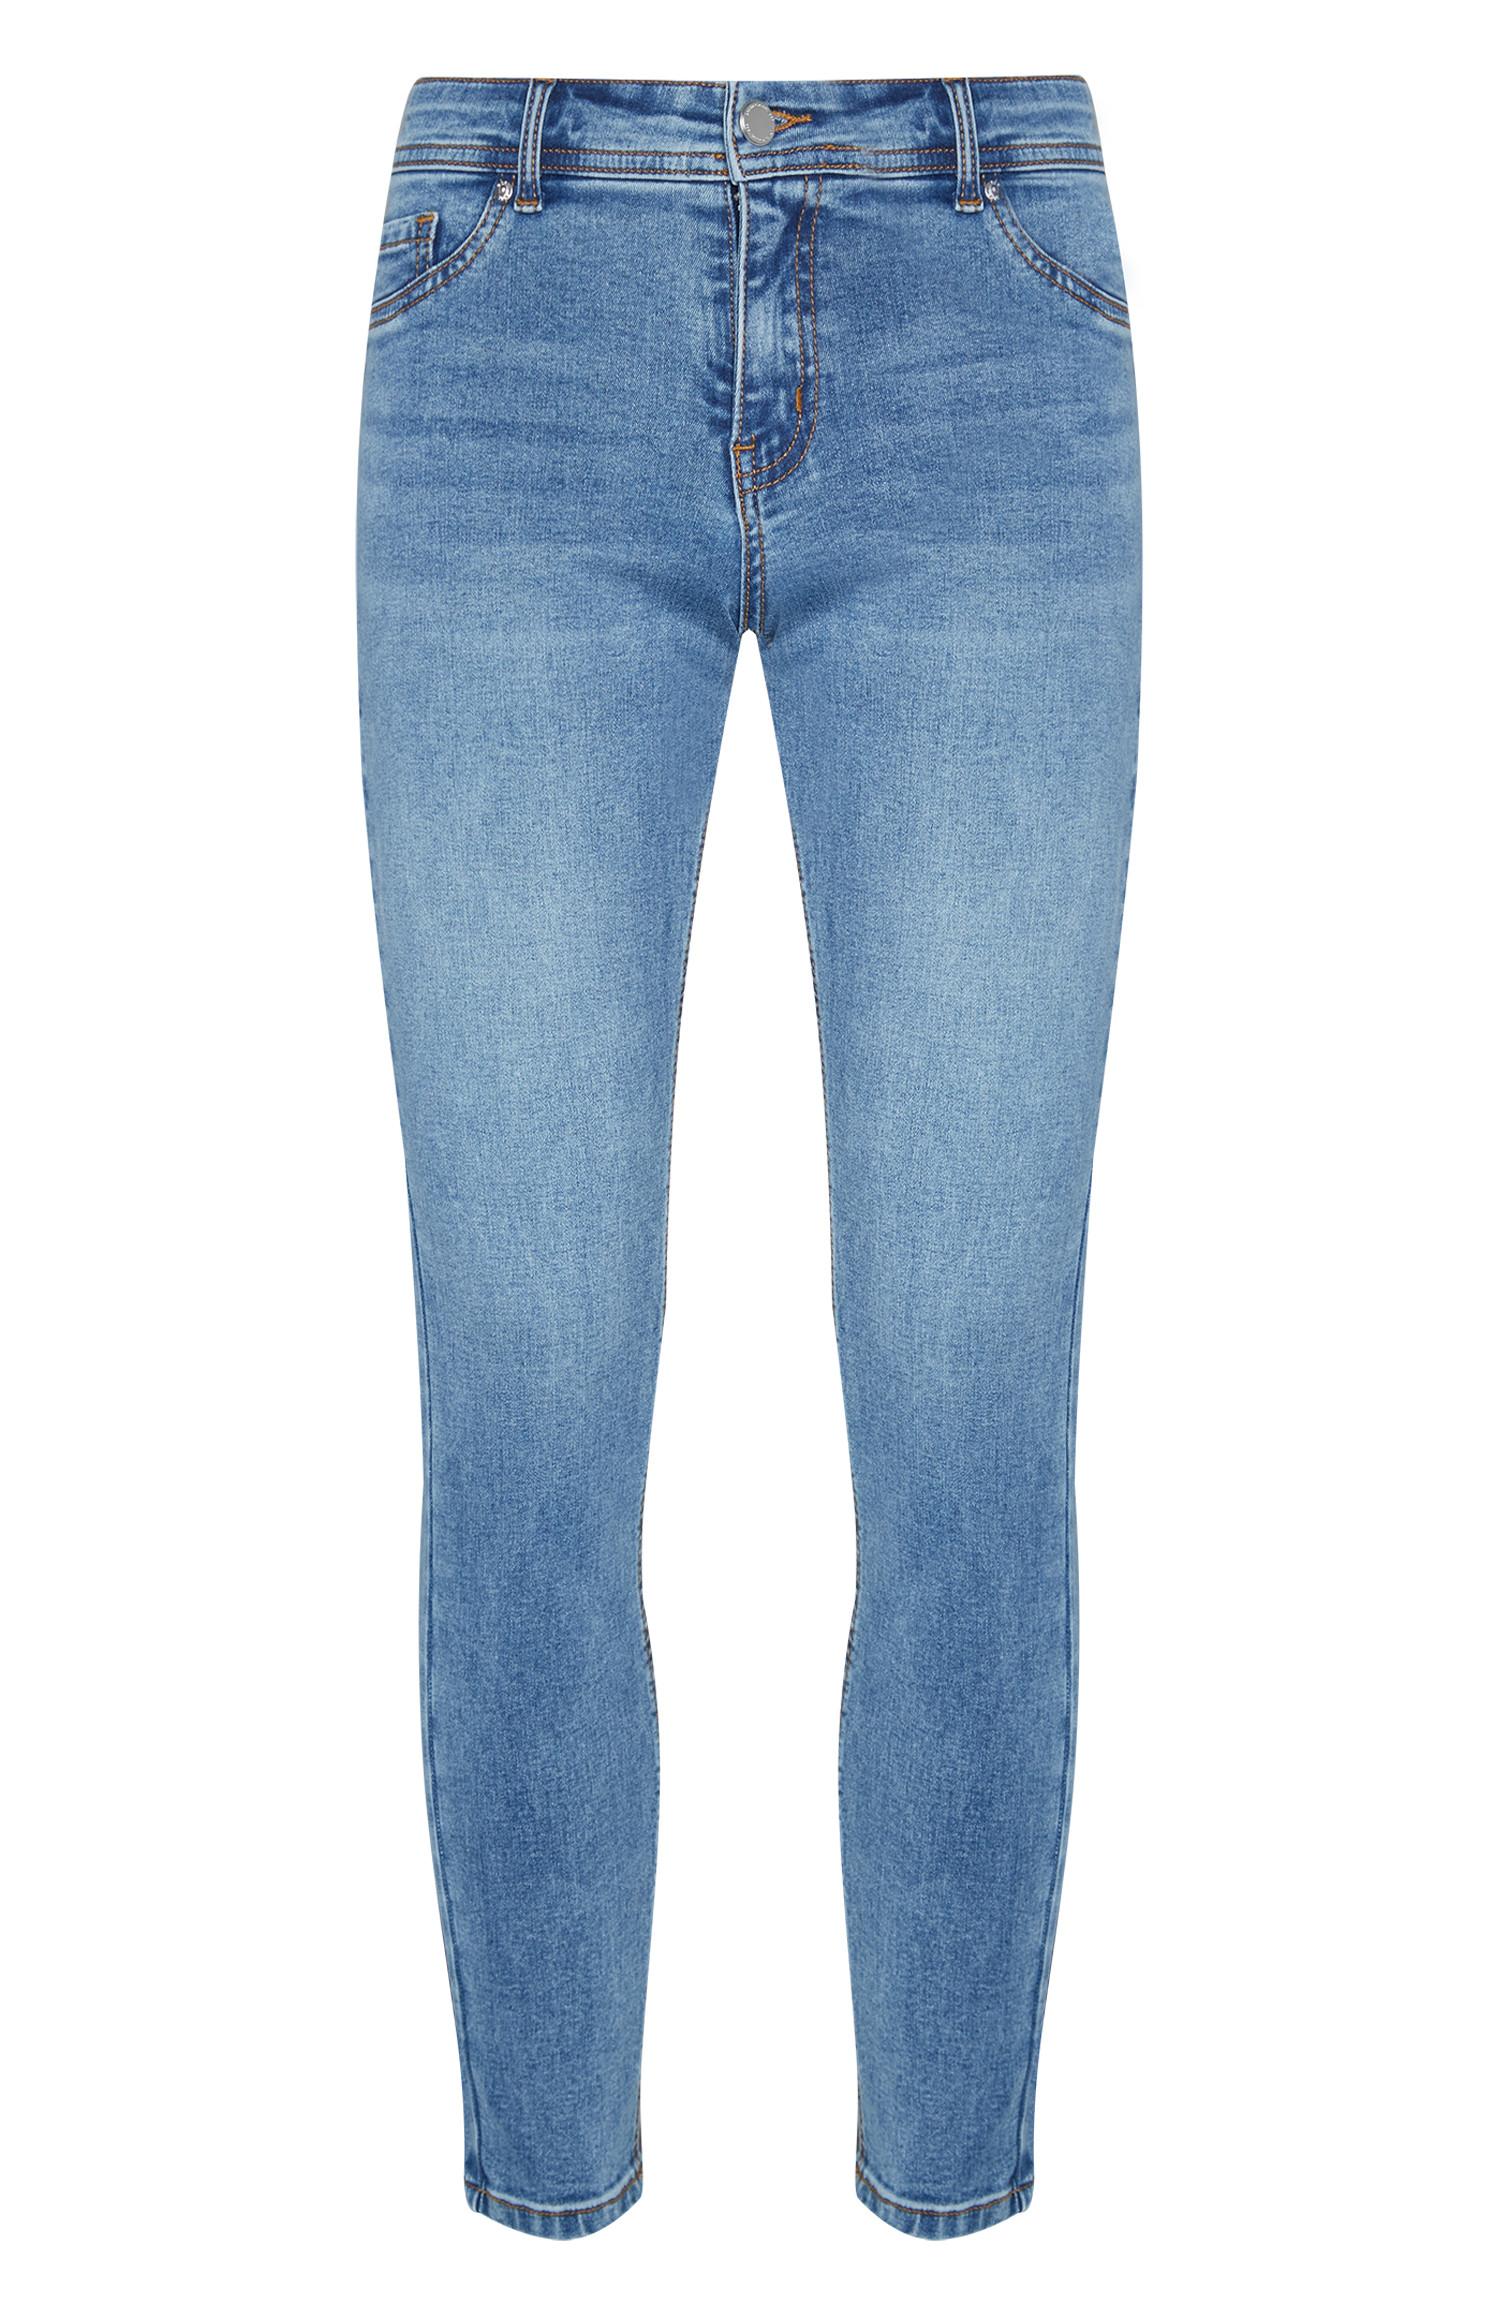 primark blue jeans